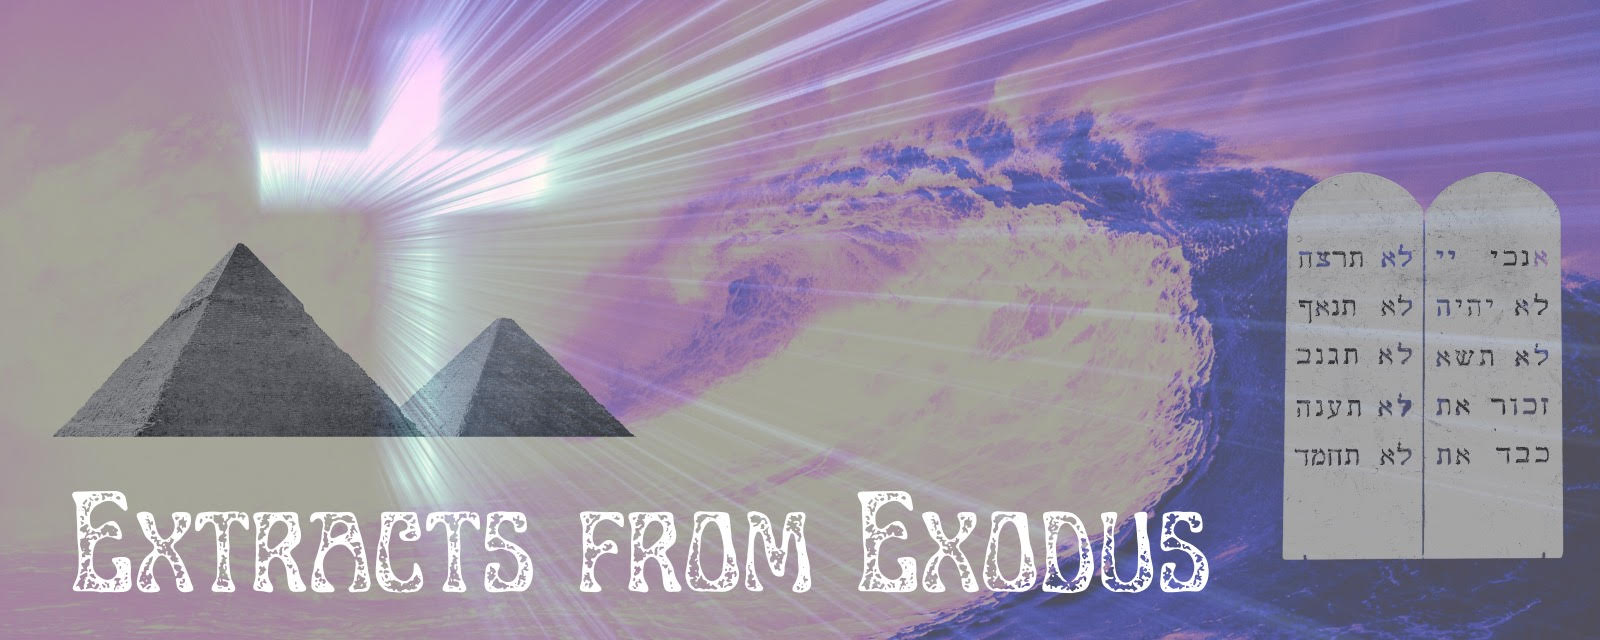 Extracts fron Exodus web slide